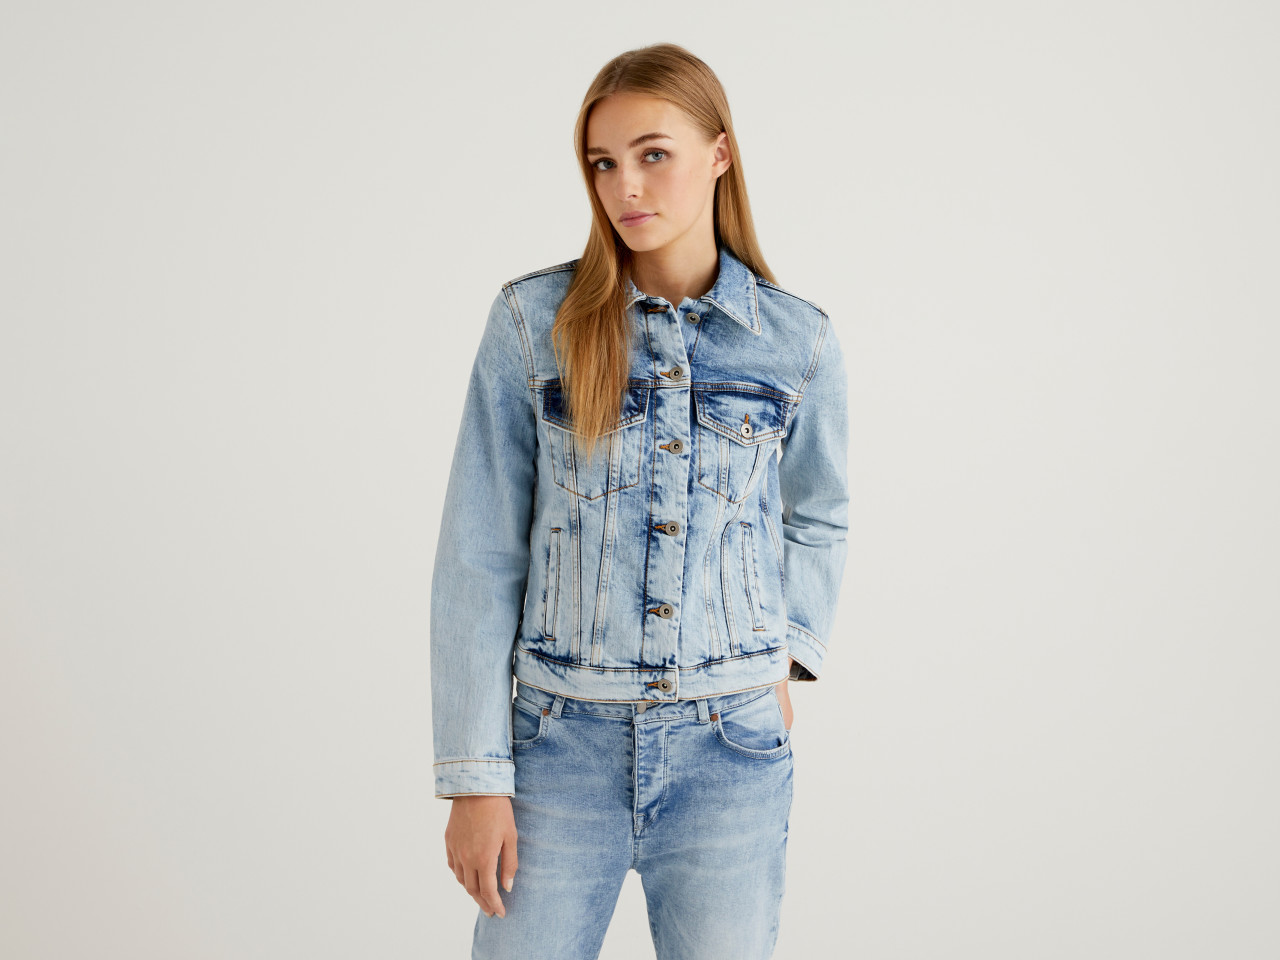 discount 76% Gray 41                  EU WOMEN FASHION Jeans Basic Benetton straight jeans 